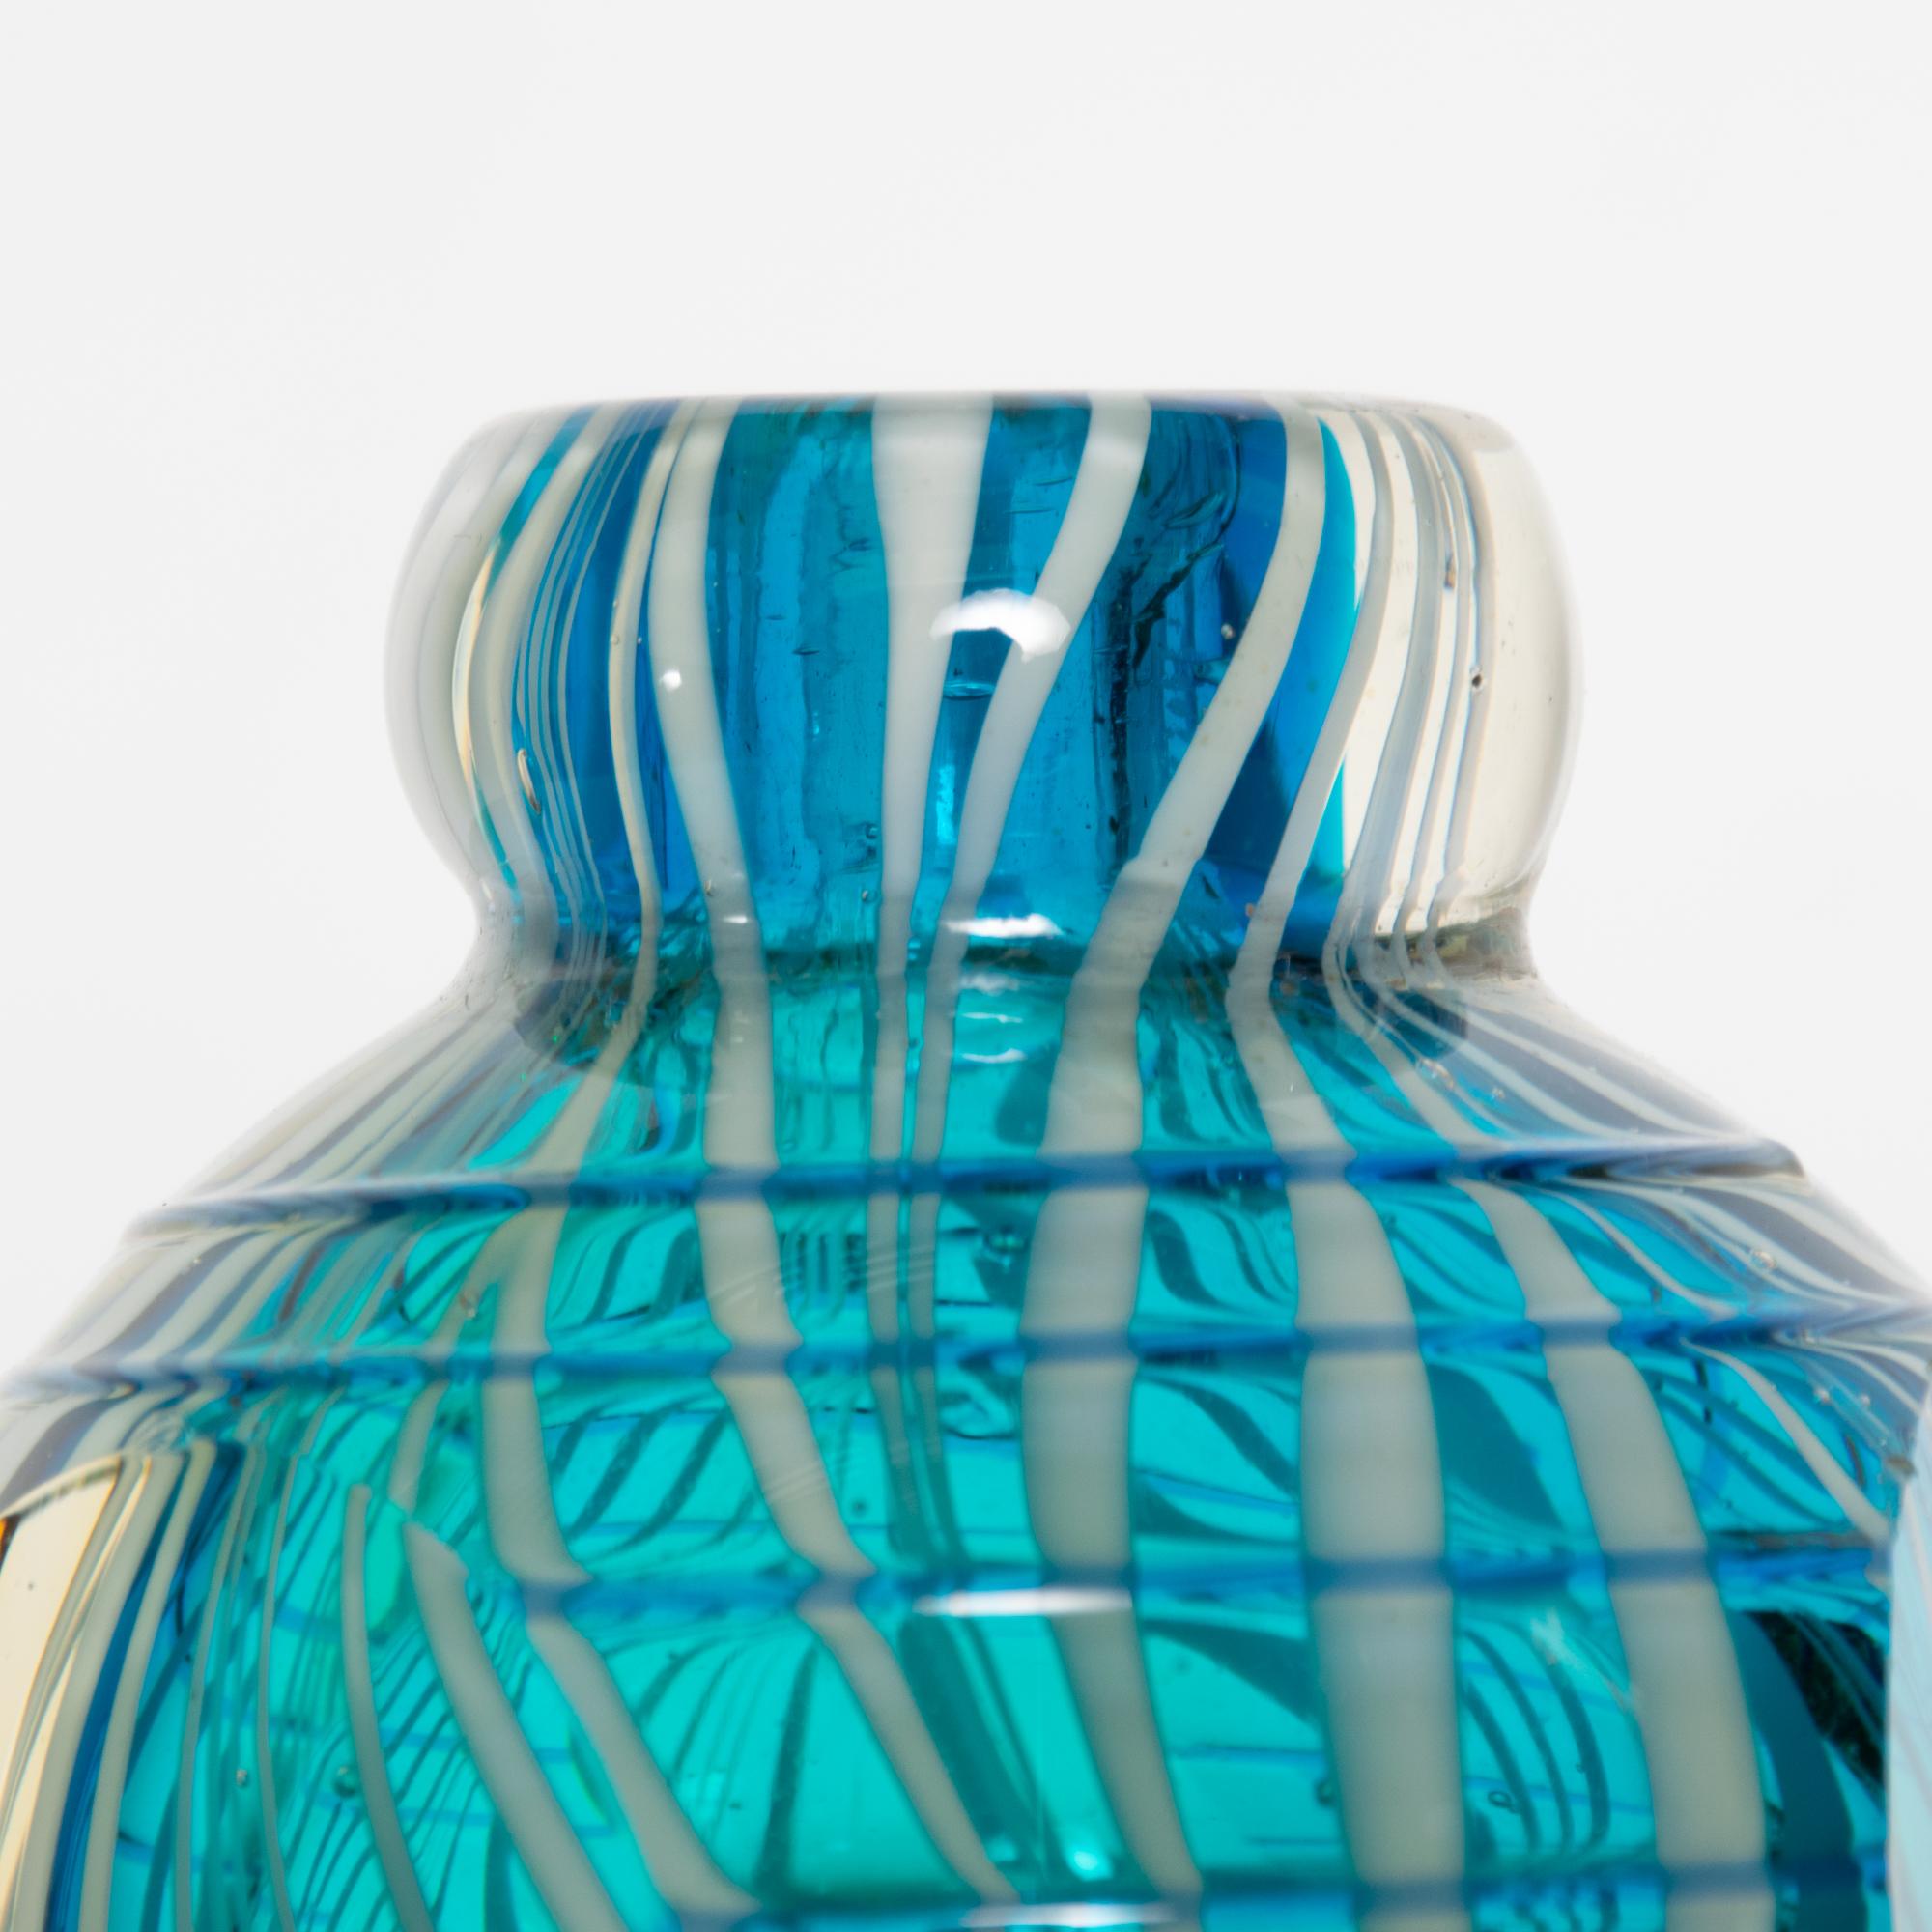 Vivid Blue Gold & White Swirled Venetian Vase Vintage Murano Glass Italy 1970s 1